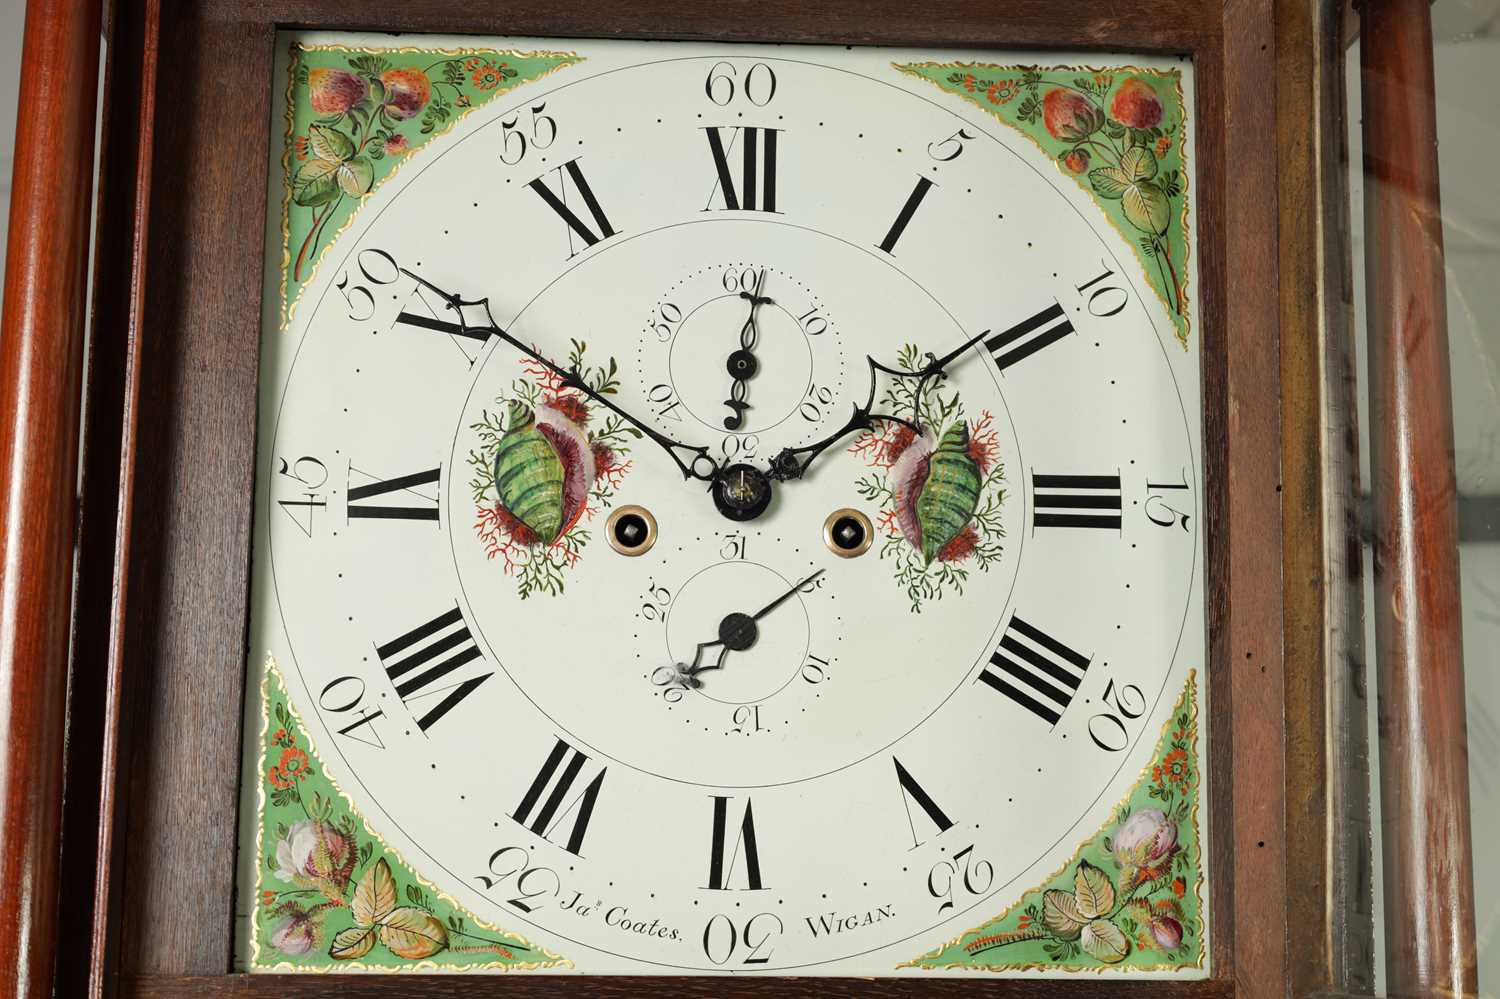 JAs. COATES, WIGAN, AN EARLY 19TH CENTURY OAK AND MAHOGANY EIGHT-DAY LONGCASE CLOCK - Image 3 of 9